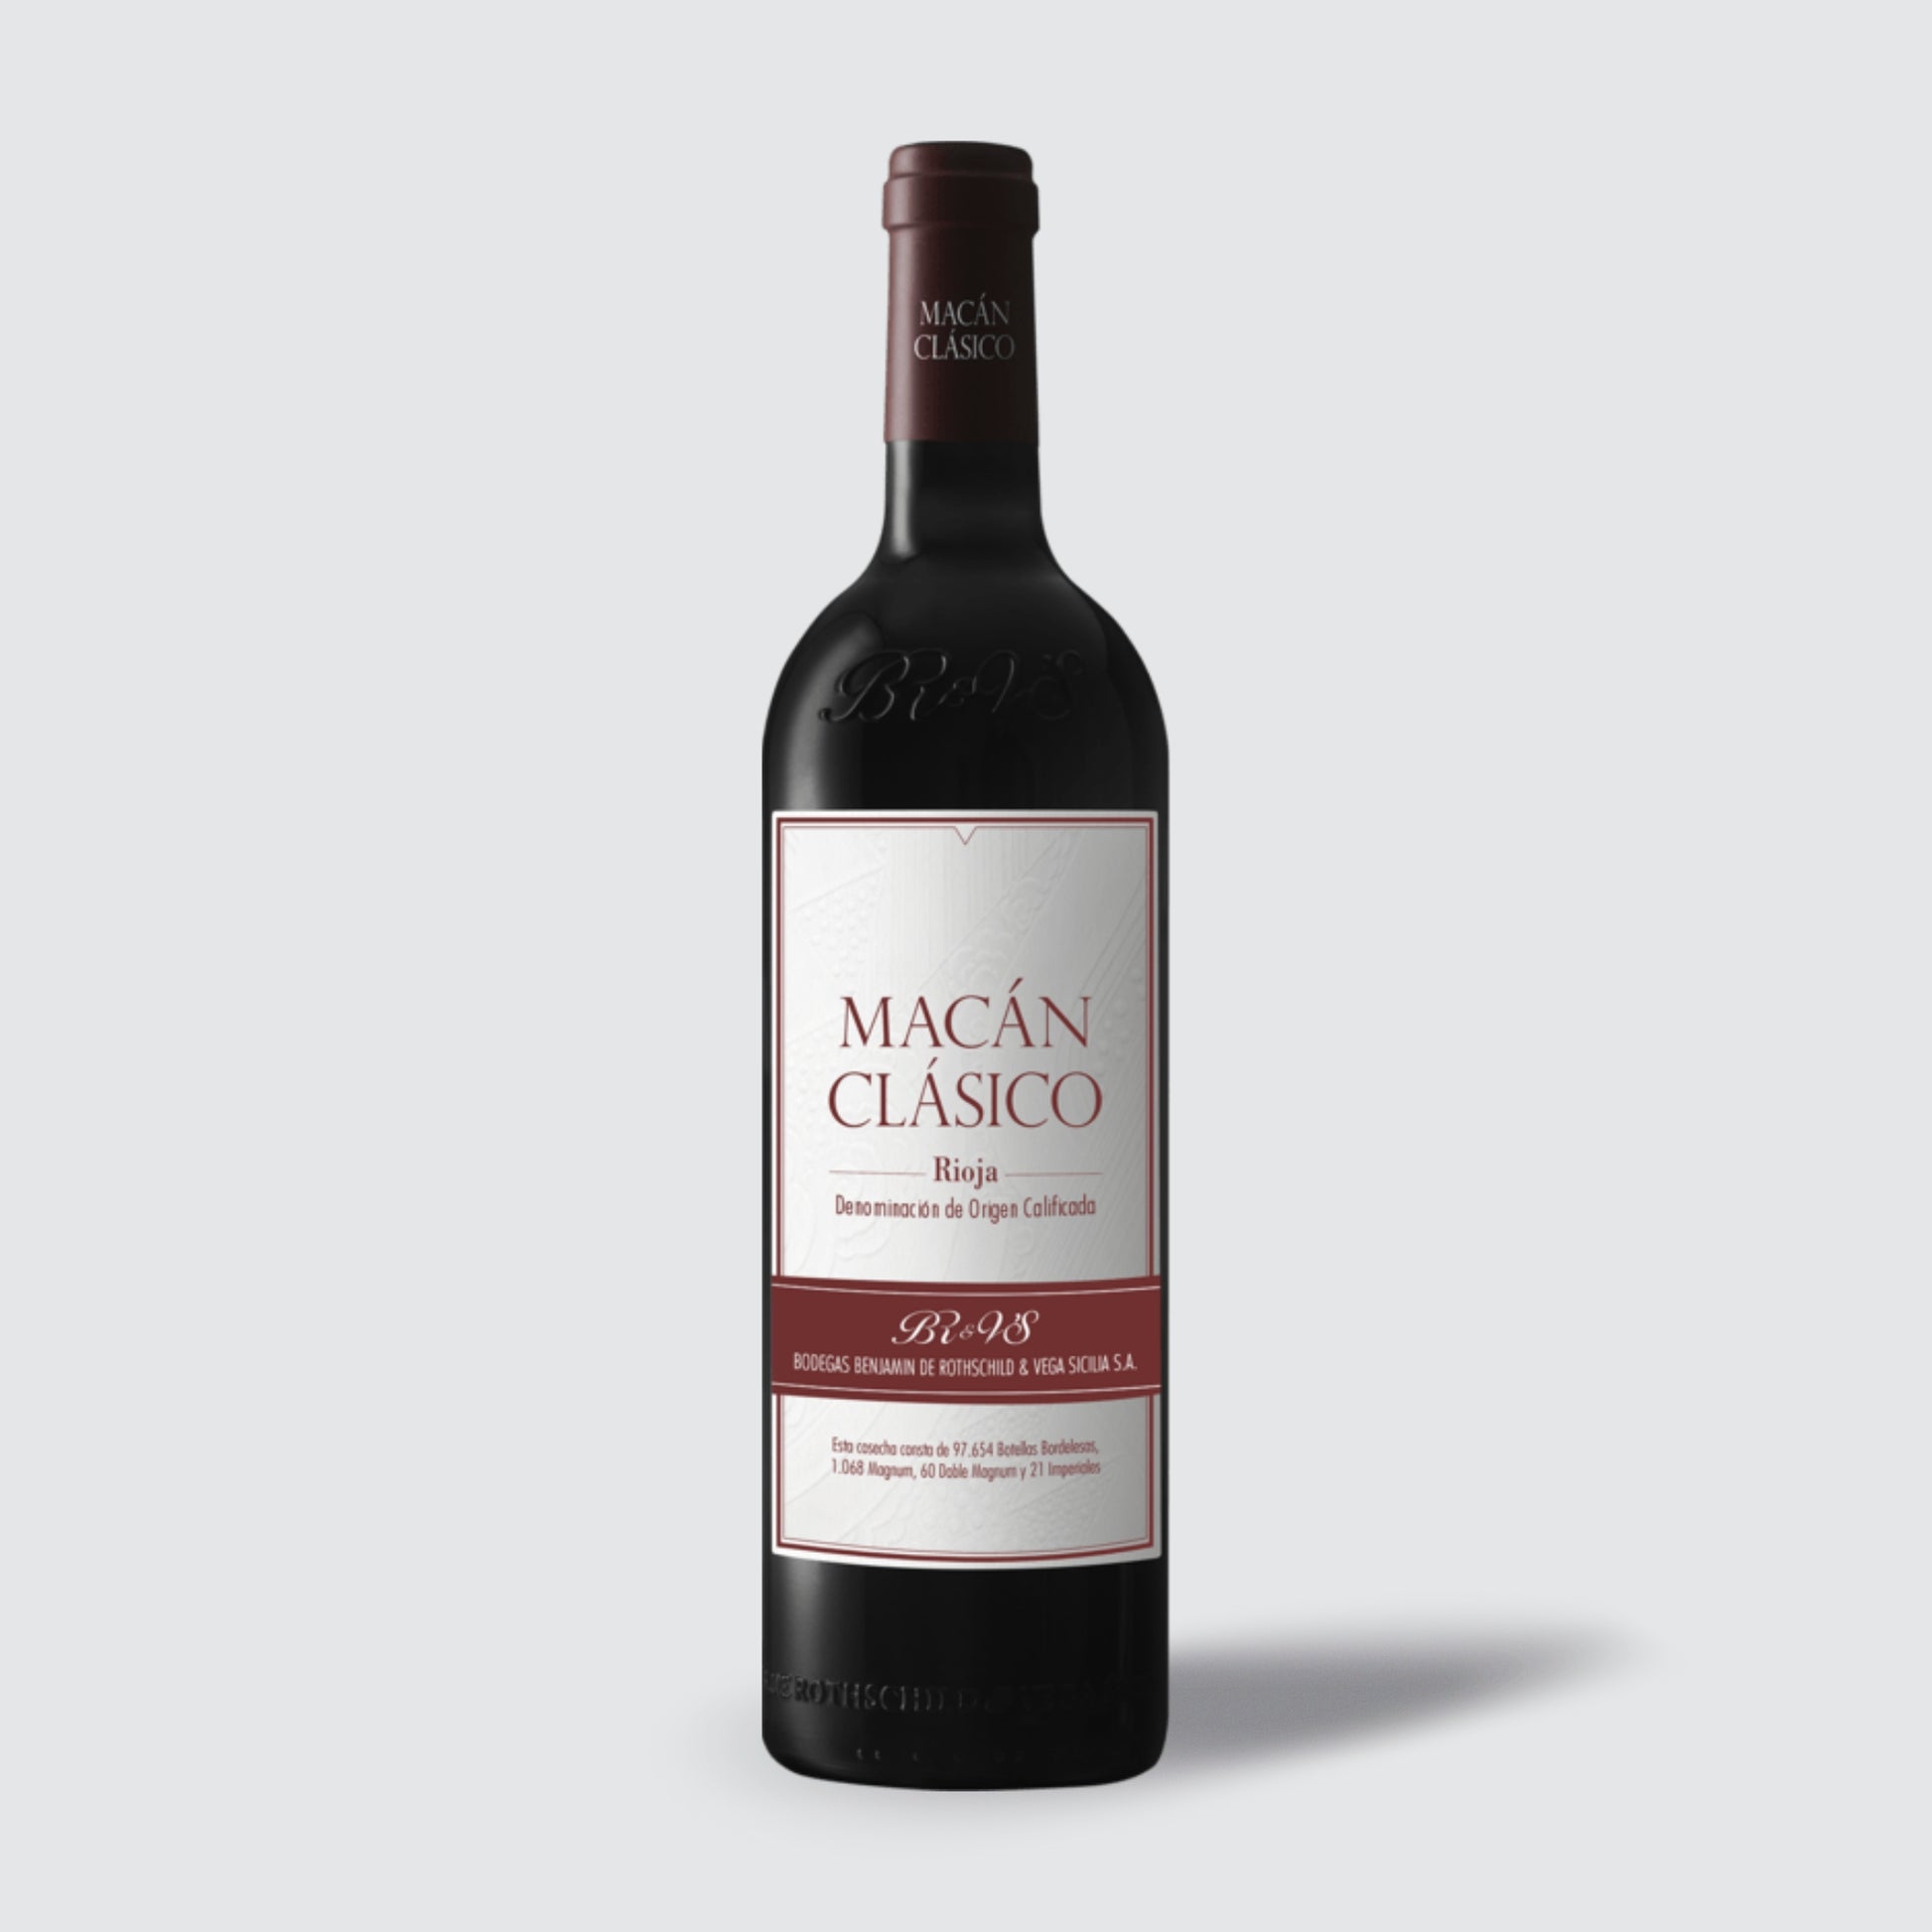 Vega Sicilia and Benjamin de Rothschild Macan Clasico Rioja Red Wine